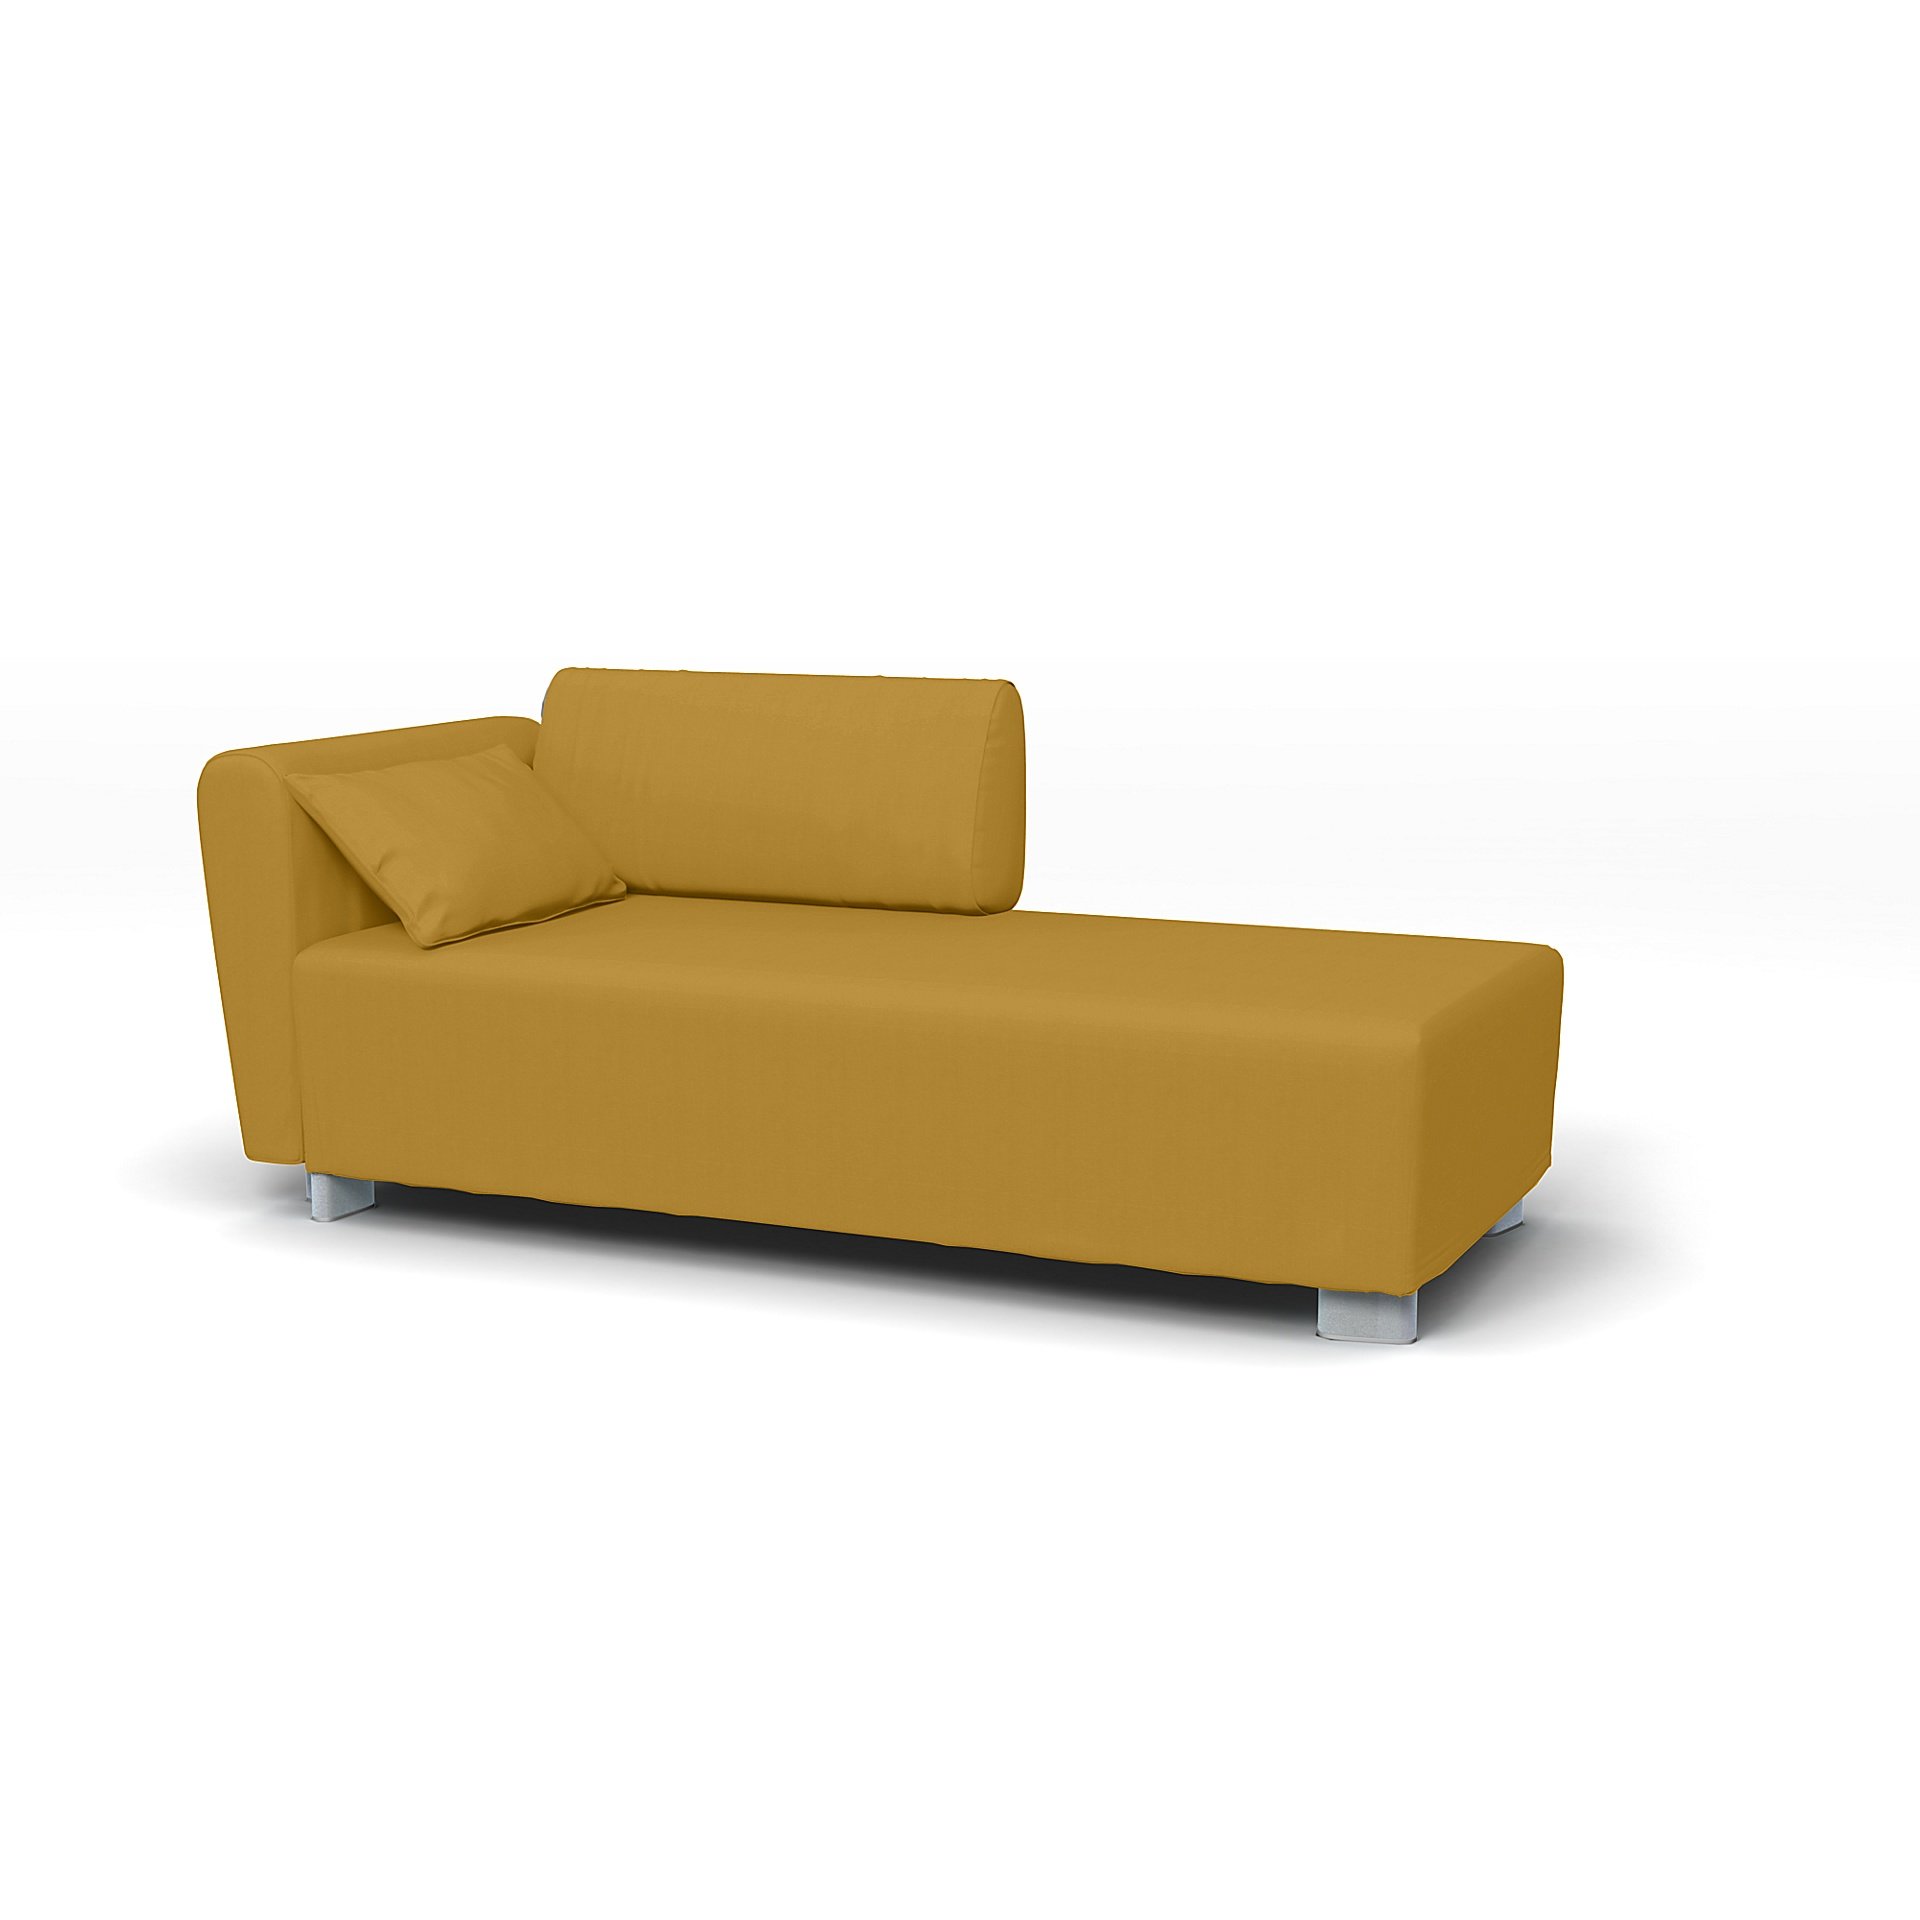 IKEA - Mysinge Chaise Longue with Armrest Cover, Honey Mustard, Cotton - Bemz